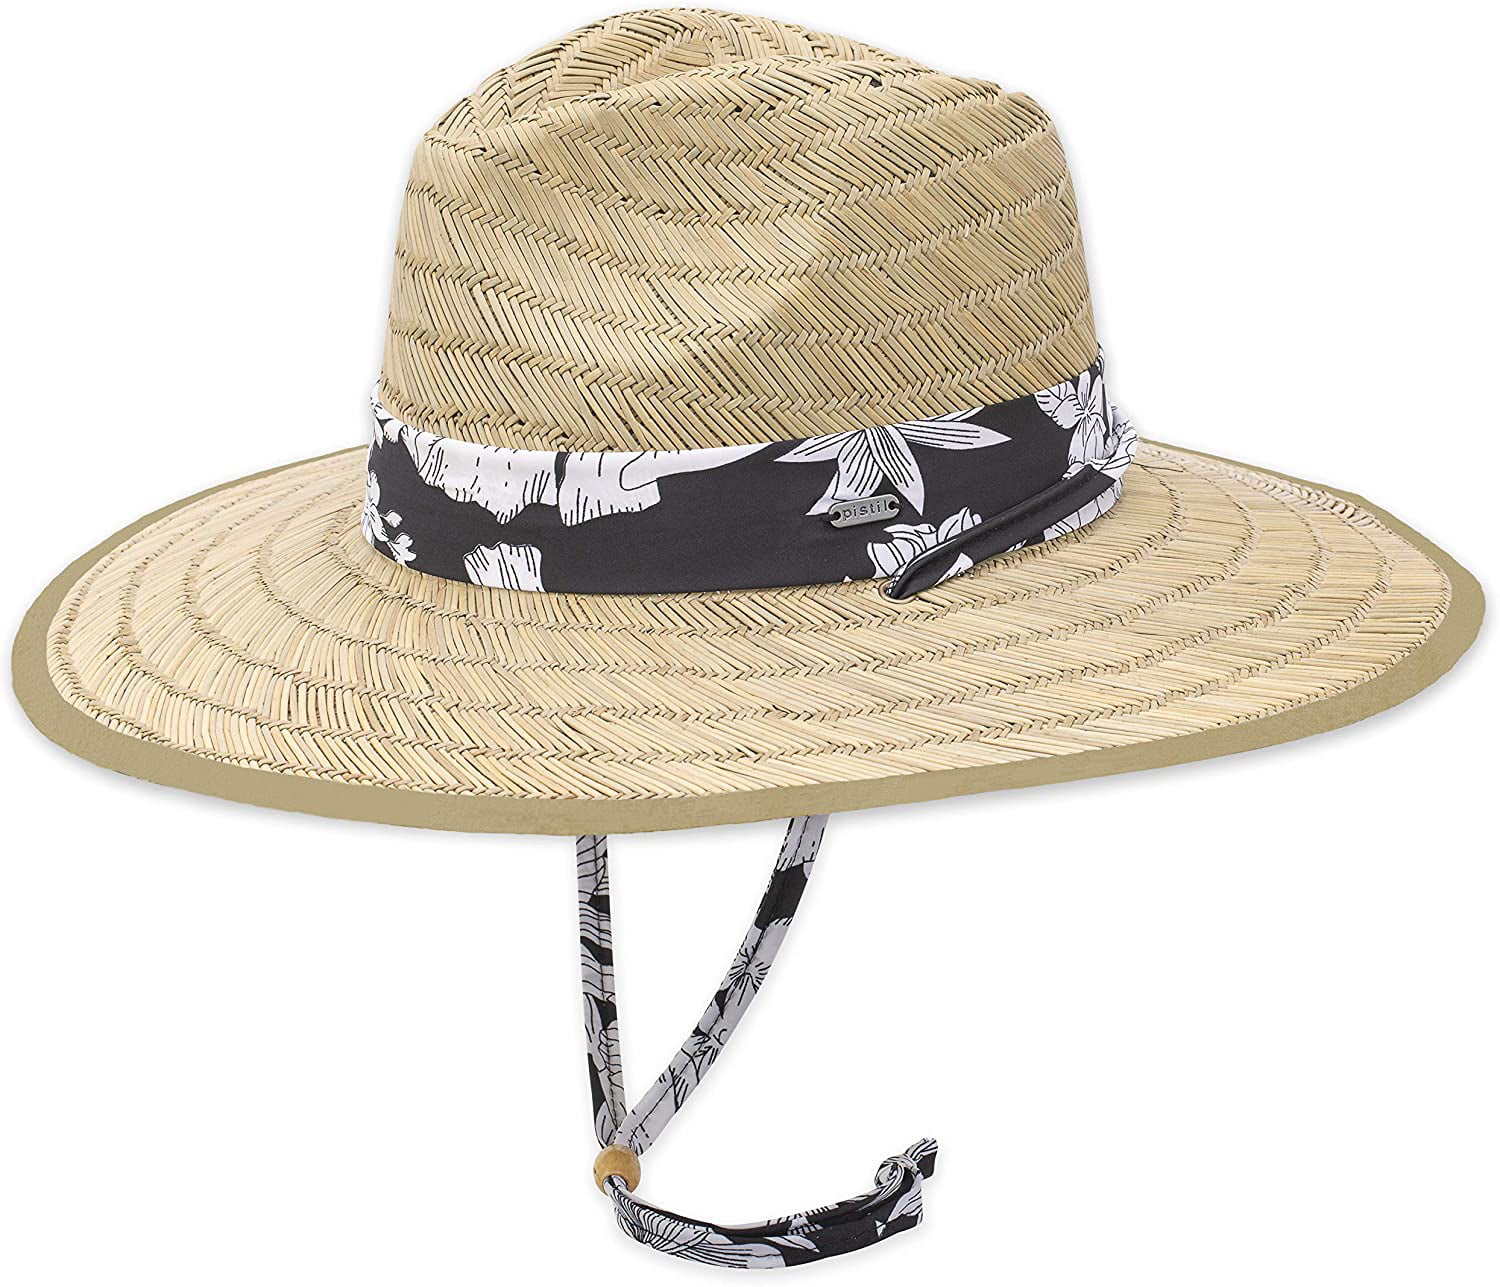 The Game NCAA Unisex-Adult Straw Safari NCAA Hat 